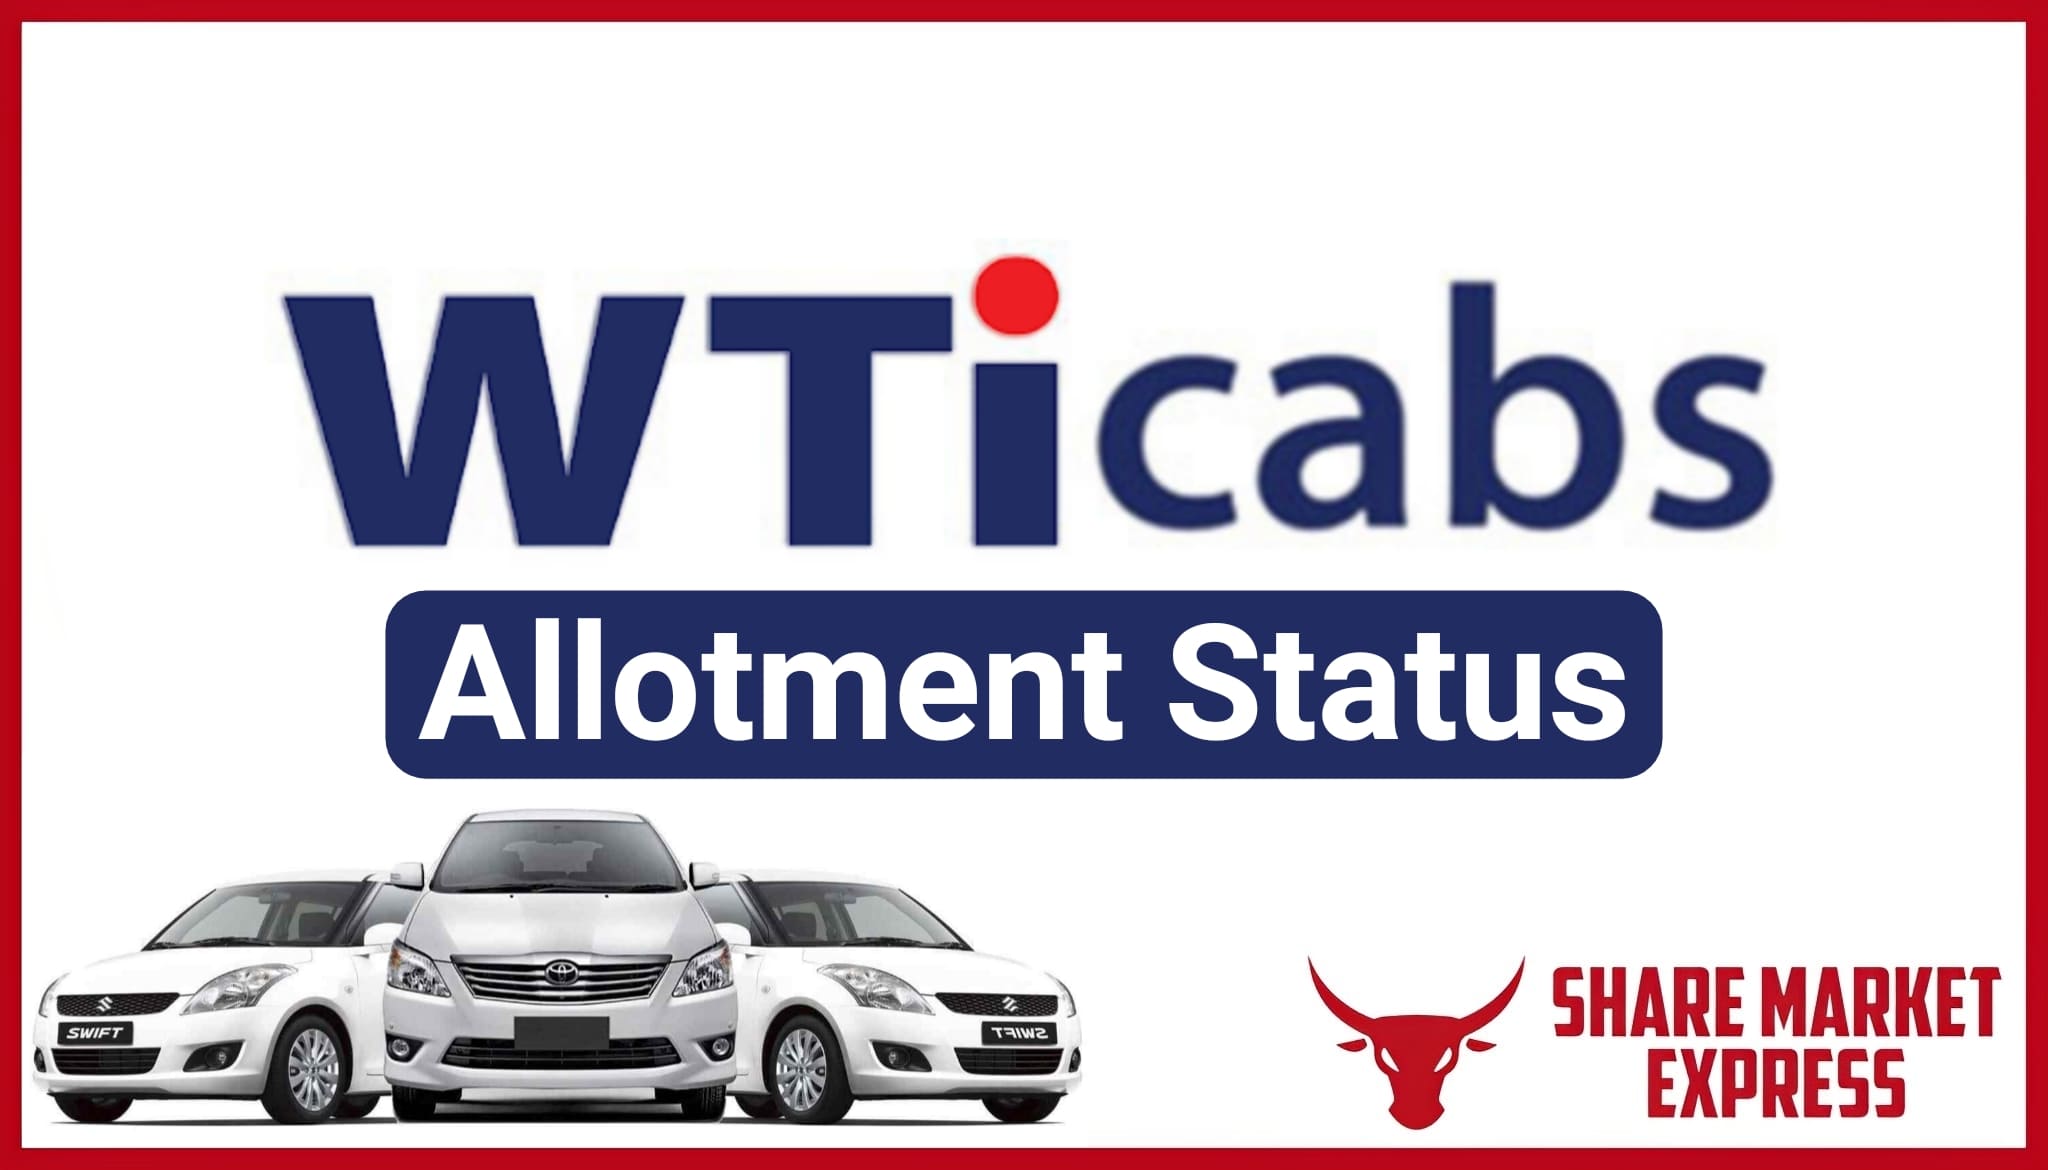 WTI Cabs IPO Allotment Status - Wise Travel India Limited IPO Allotment Status - Wise Travel IPO Allotment Status (Live Data)